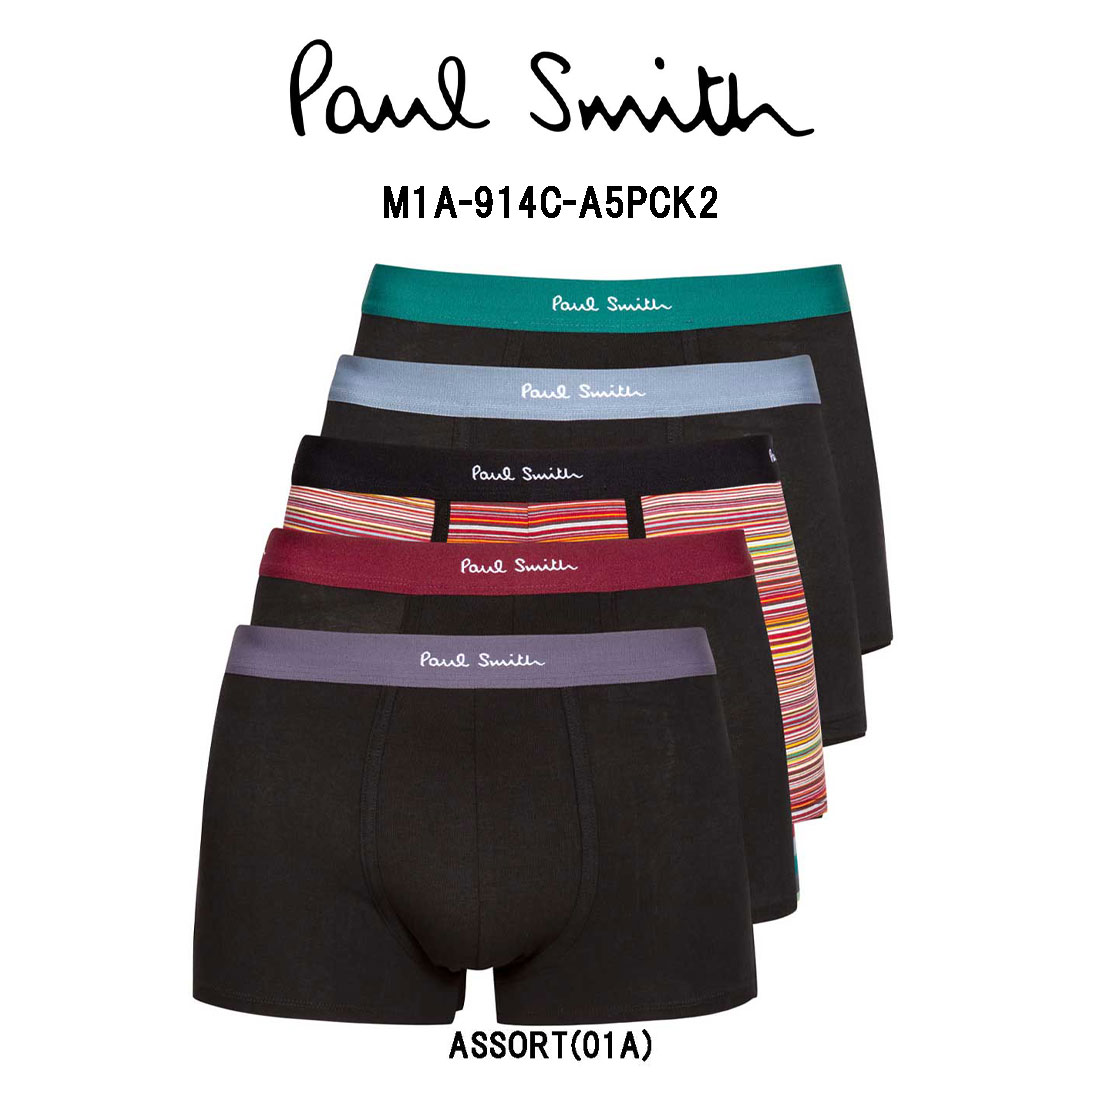 Paul Smith(ポールスミス)ボクサーパンツ 5枚セット お買得パック メンズ 男性用下着 M1A-914C-A5PCK2 |  UNDIE楽天市場店